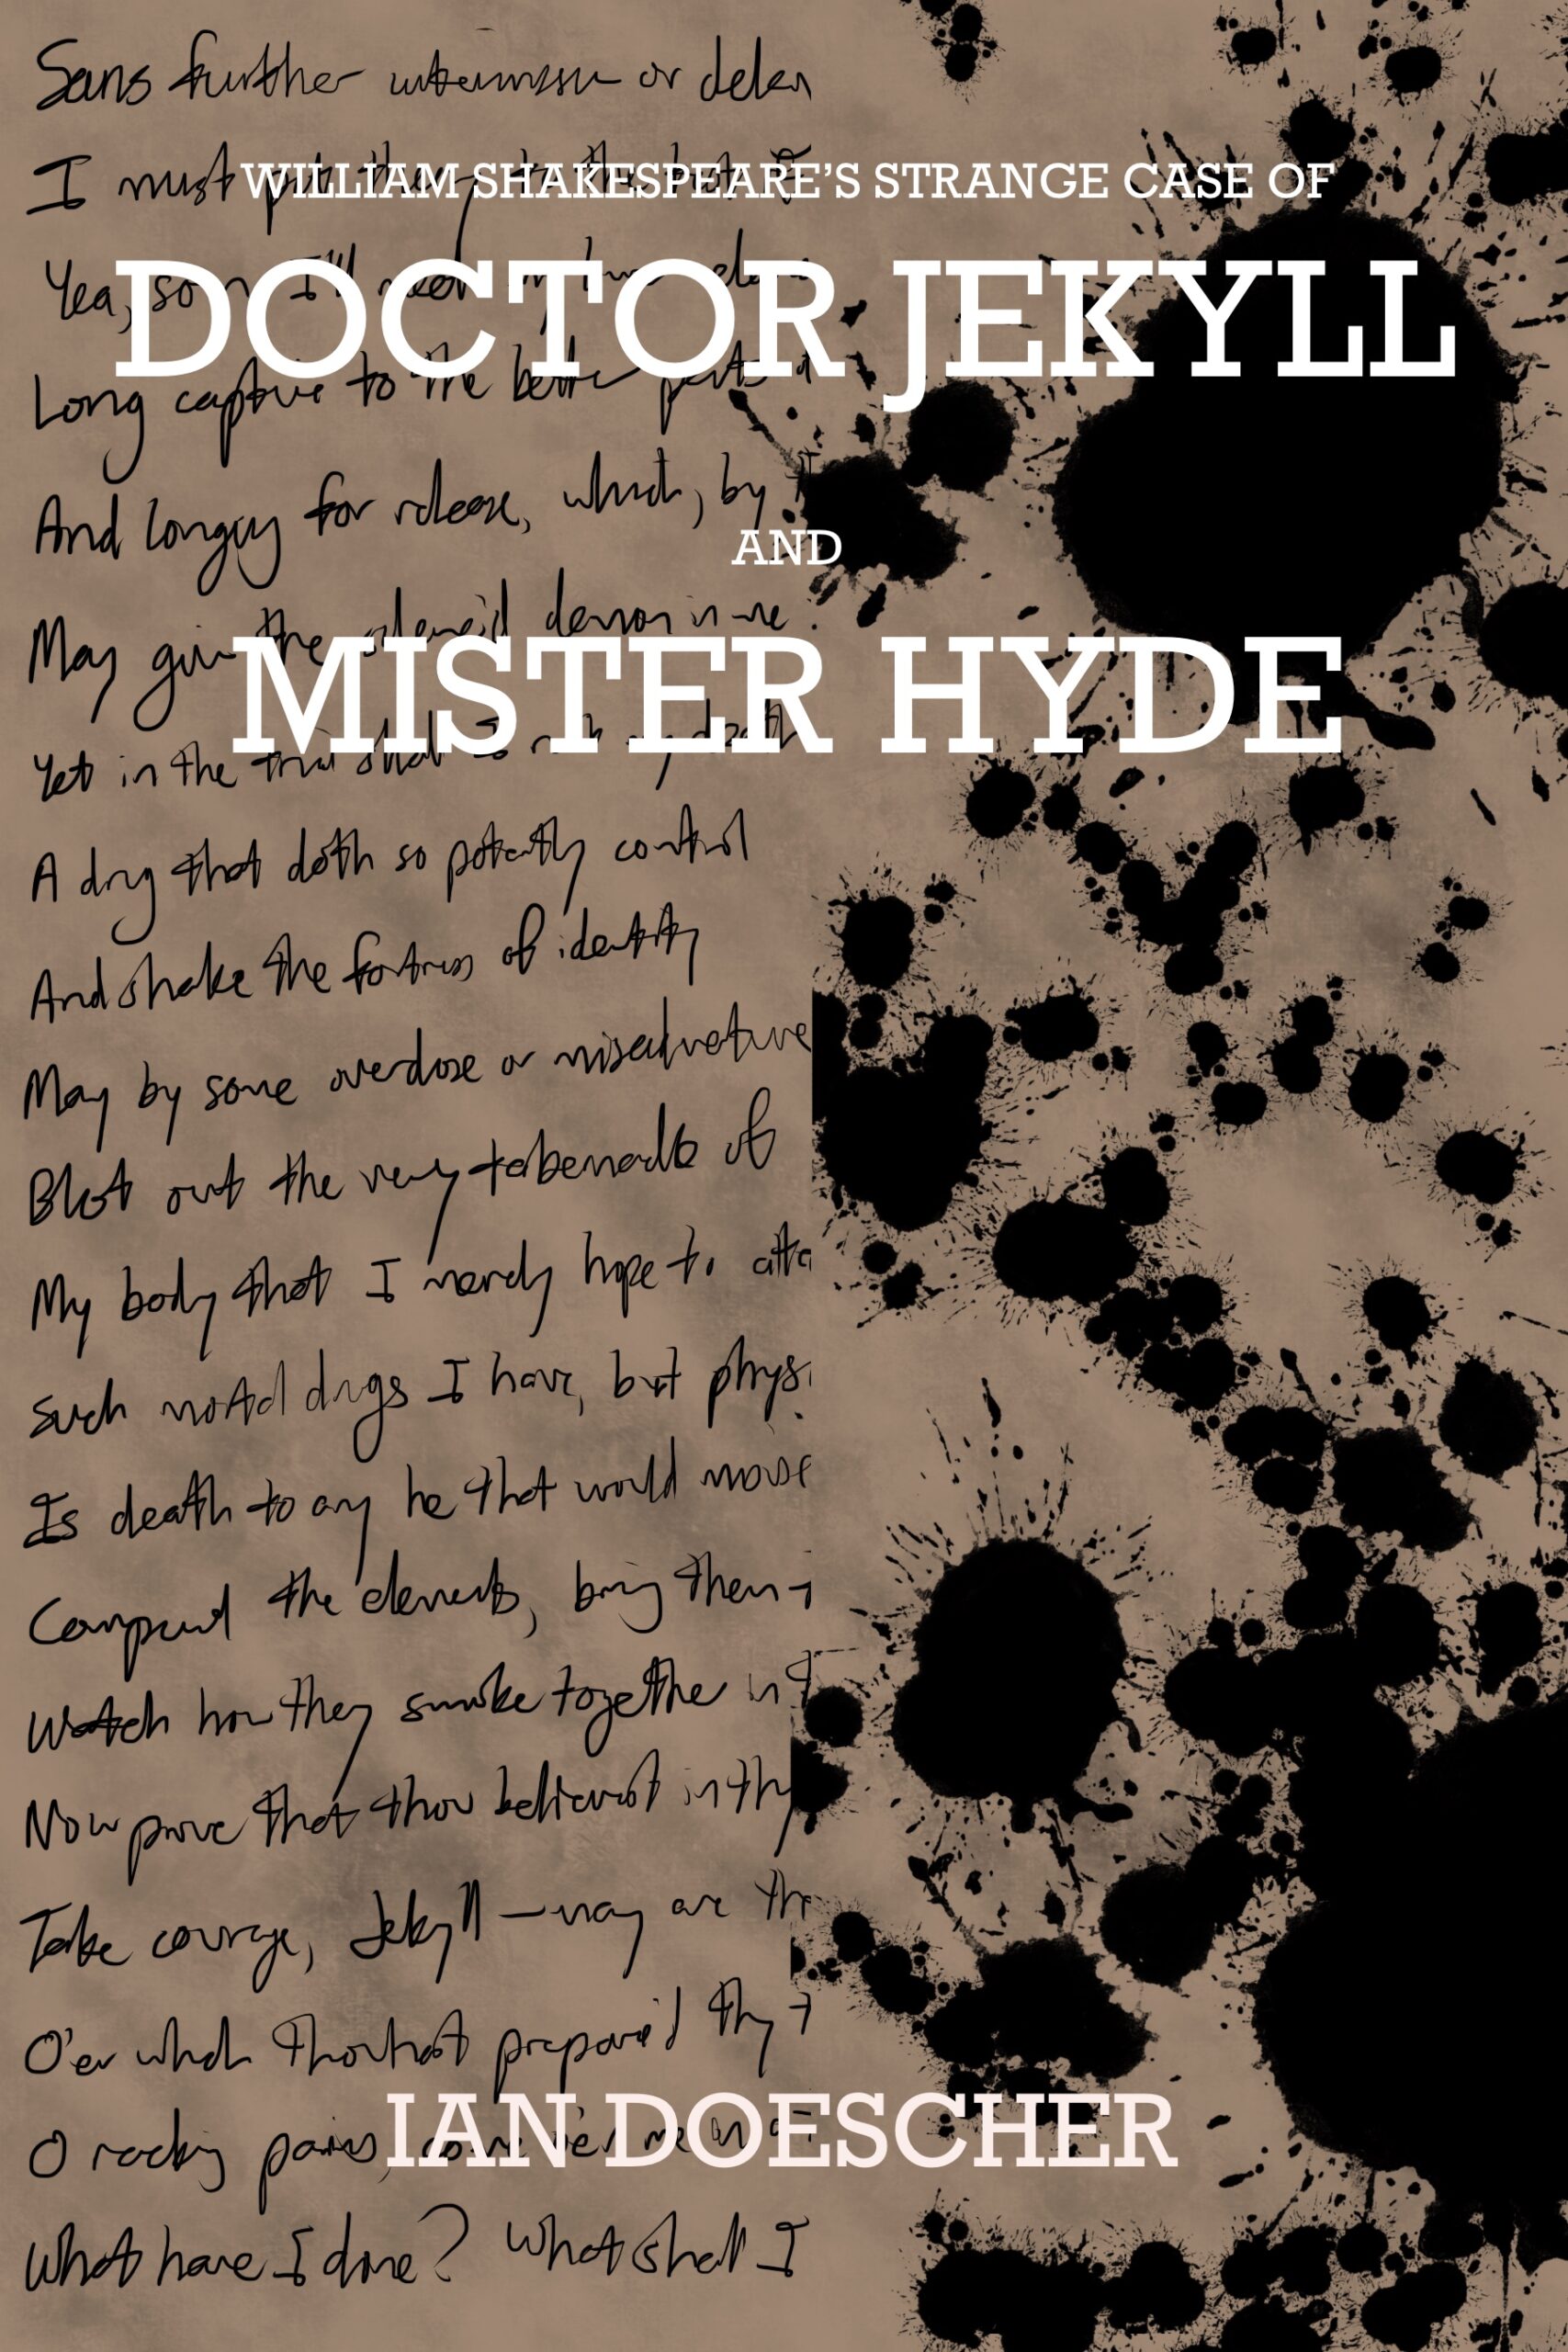 William Shakespeare's Strange Case of Doctor Jekyll and Mister Hyde